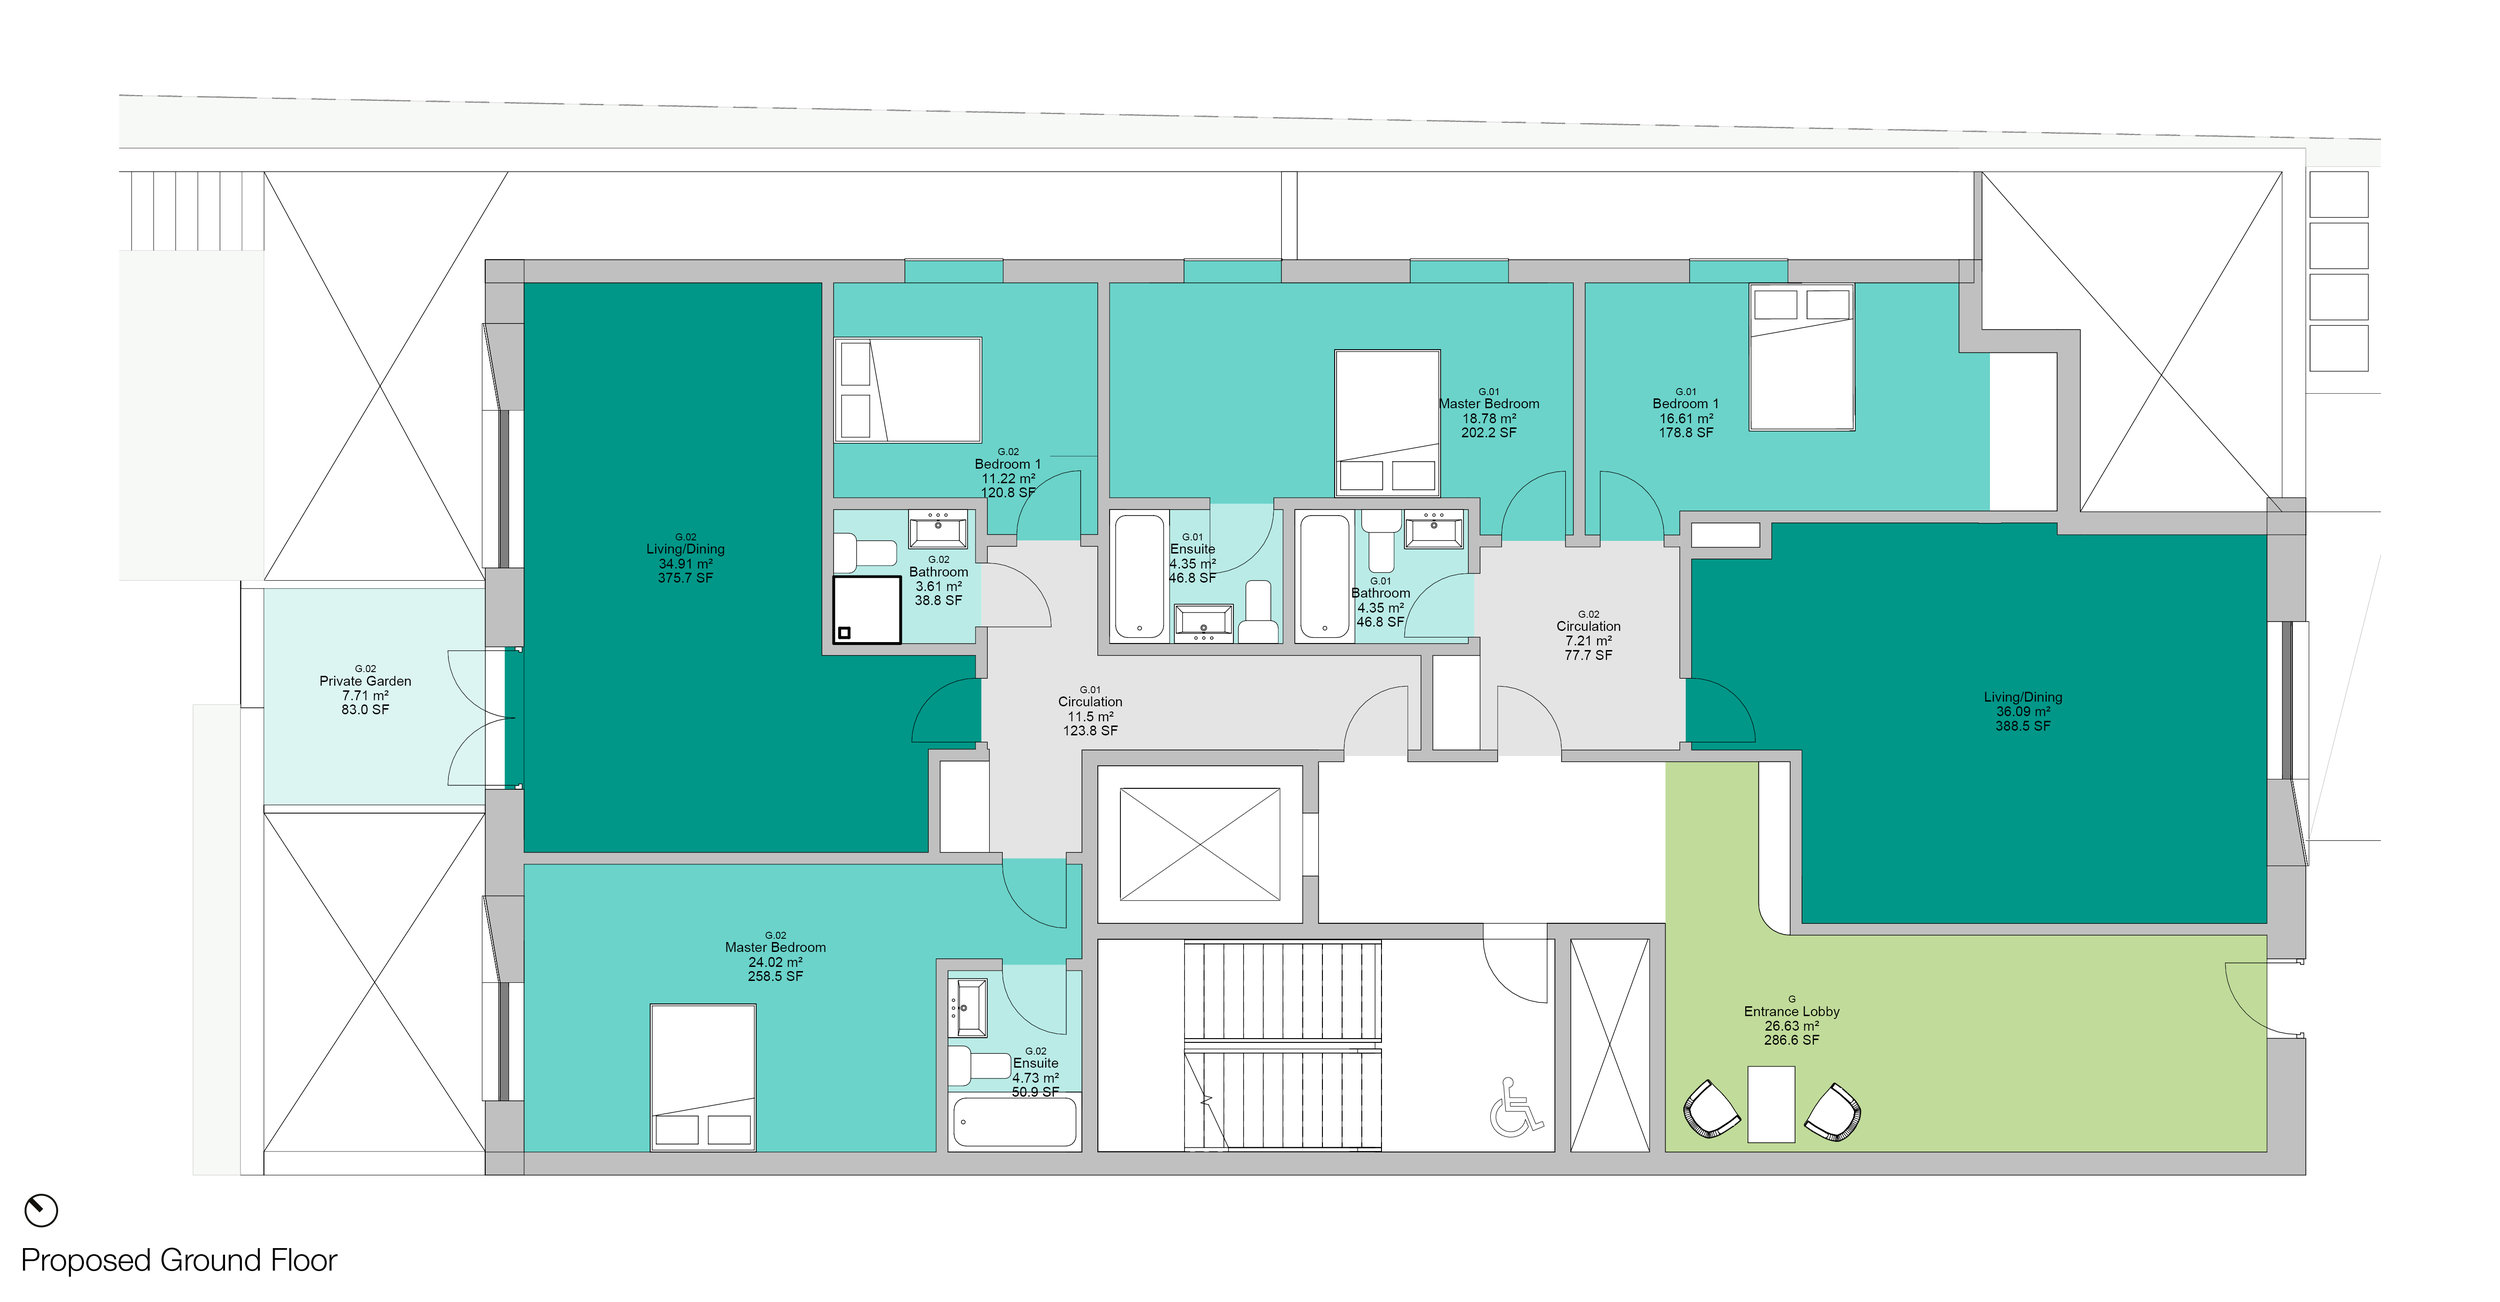 © Copyright Studio DS 2018 - the Multi Home Smart Home Ground Floor Plan